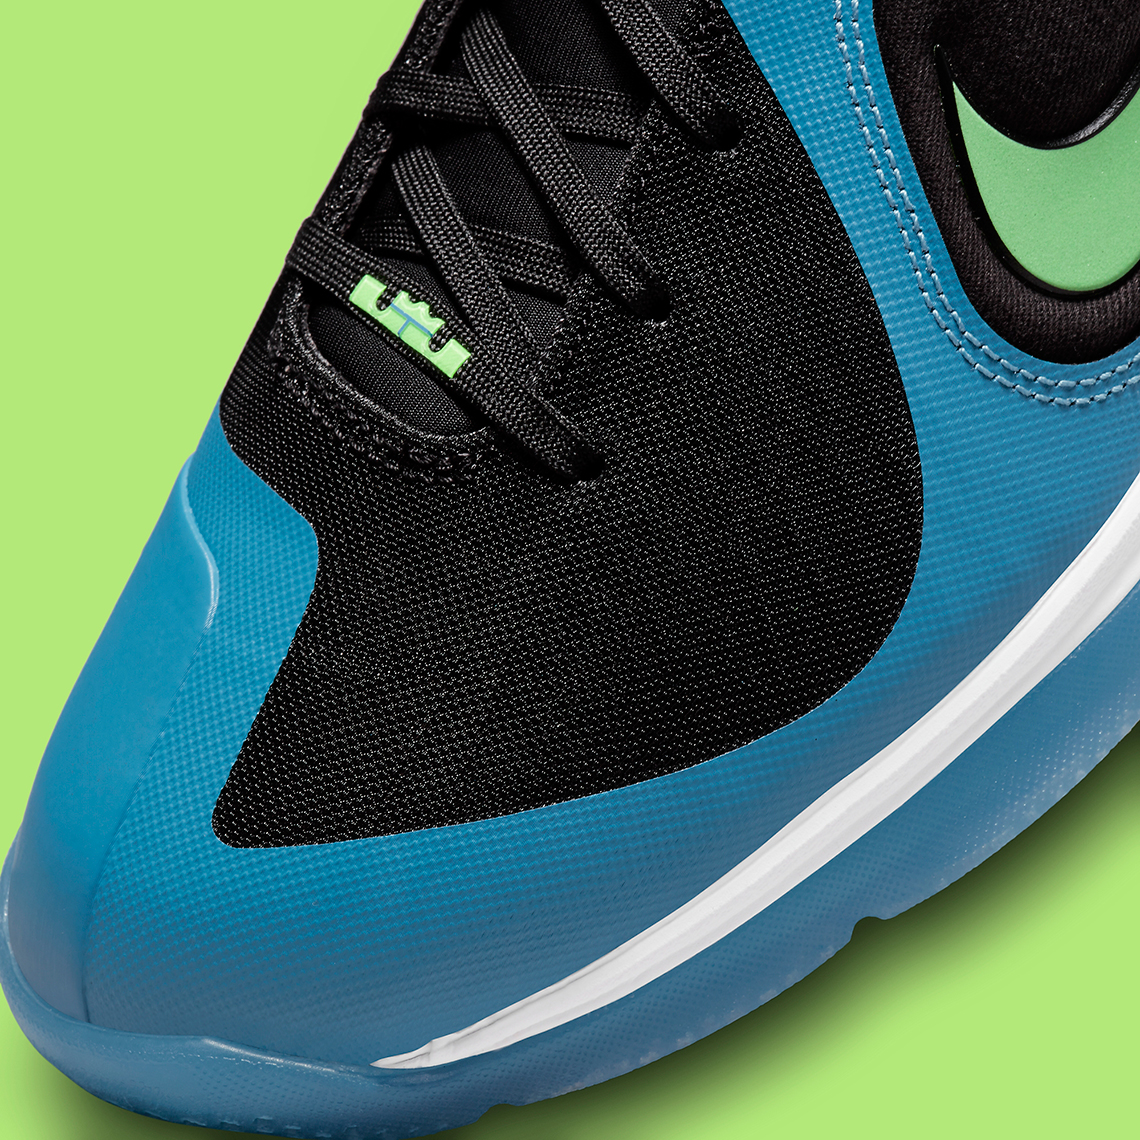 Nike Lebron 9 South Coast Do5838 001 Release Date 5